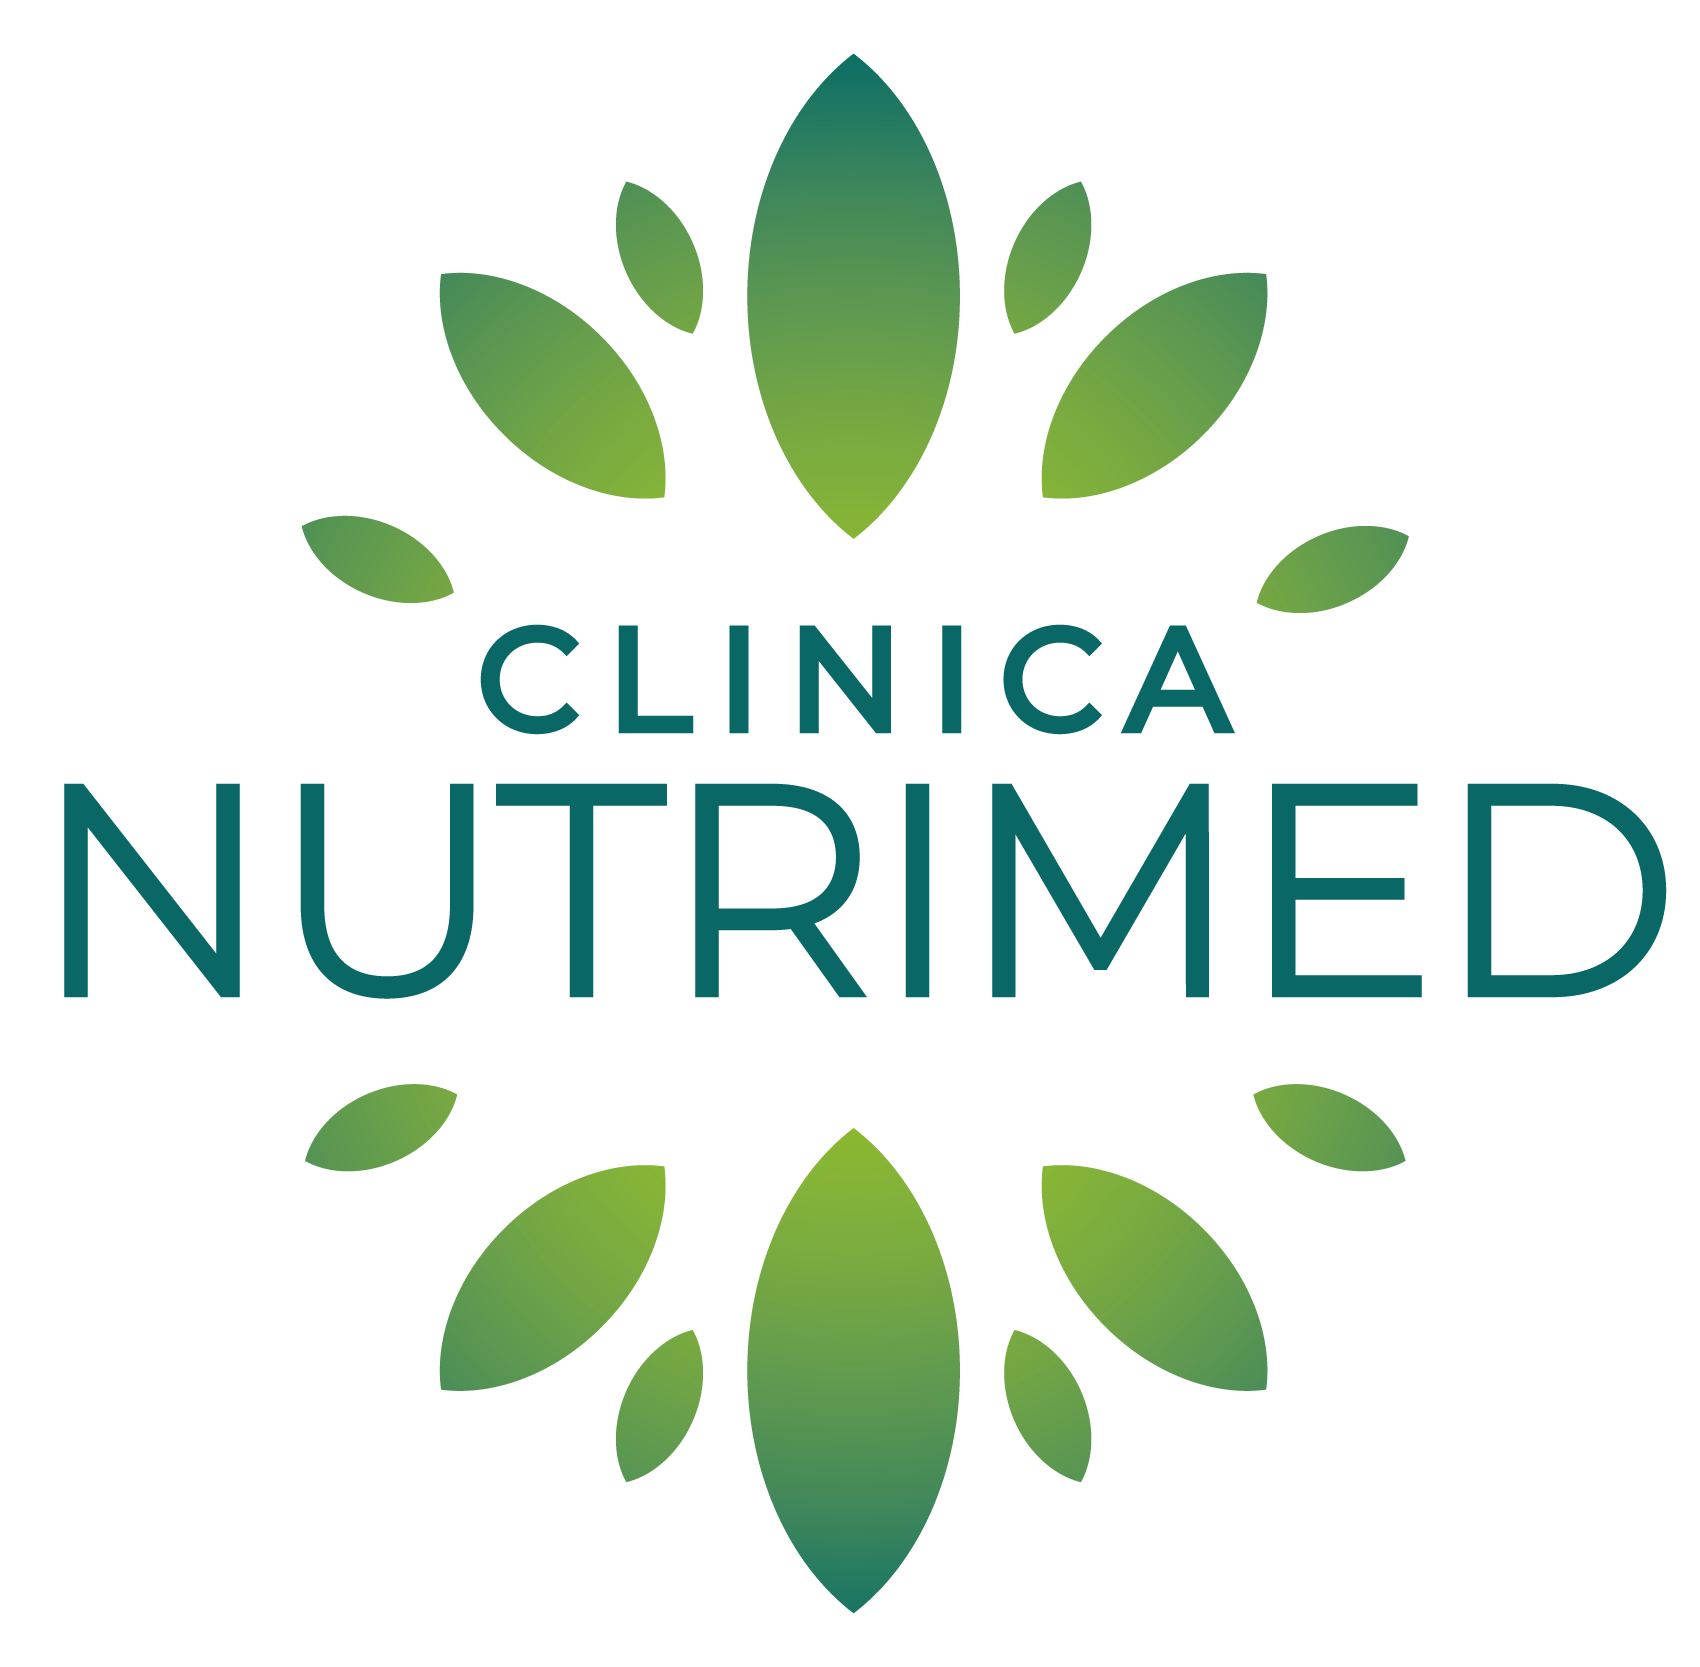 Clinica Nutrimed